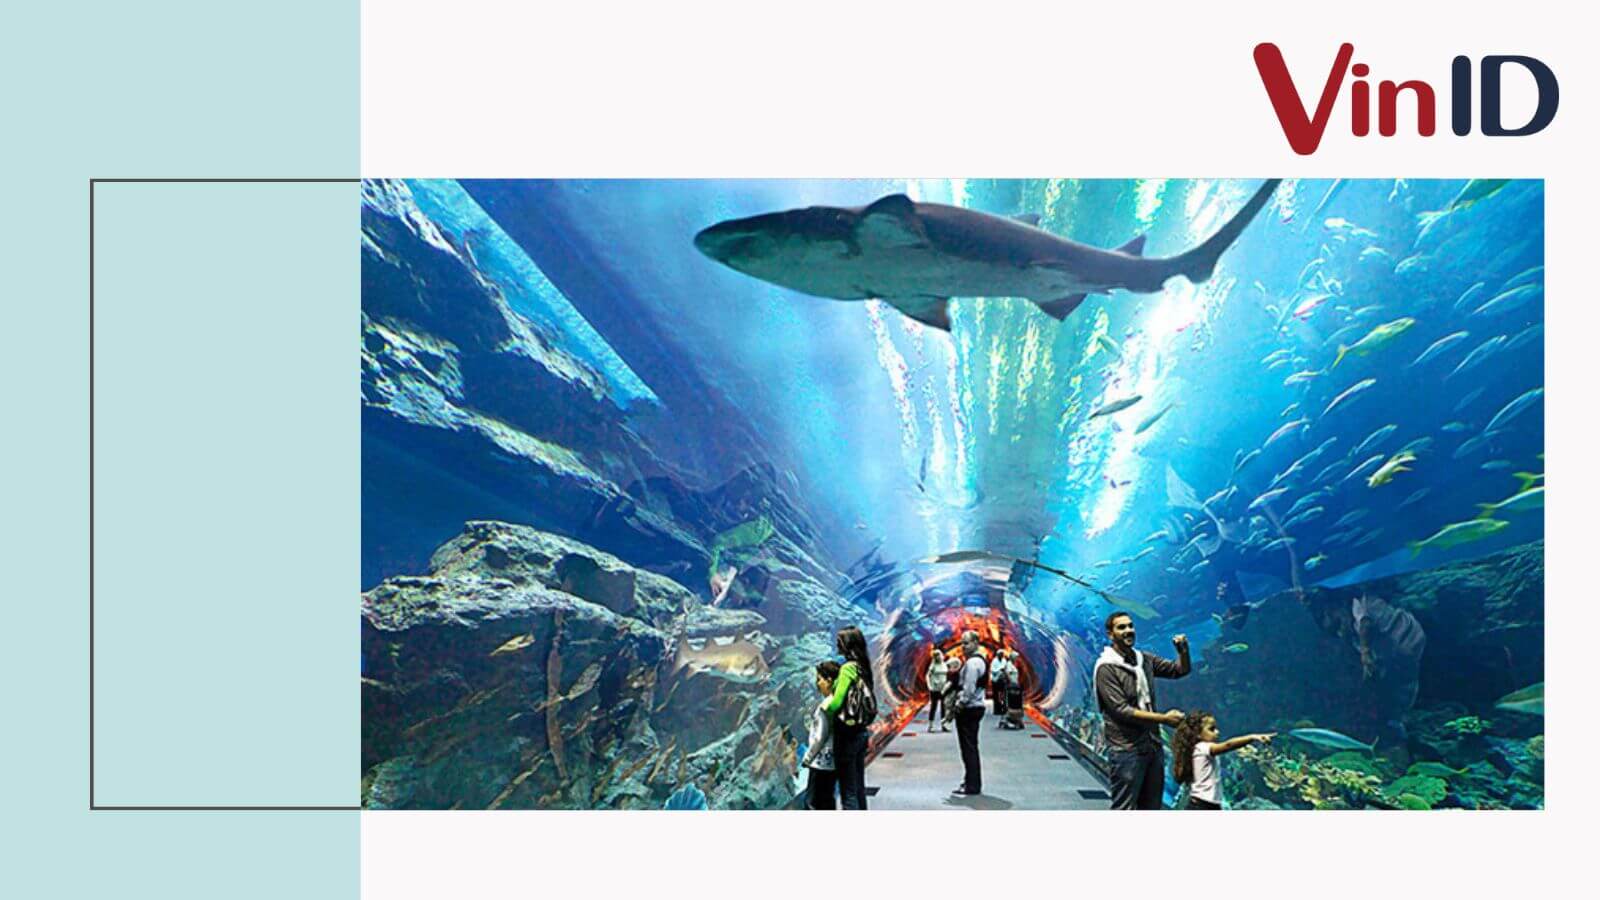 Aquarium times city